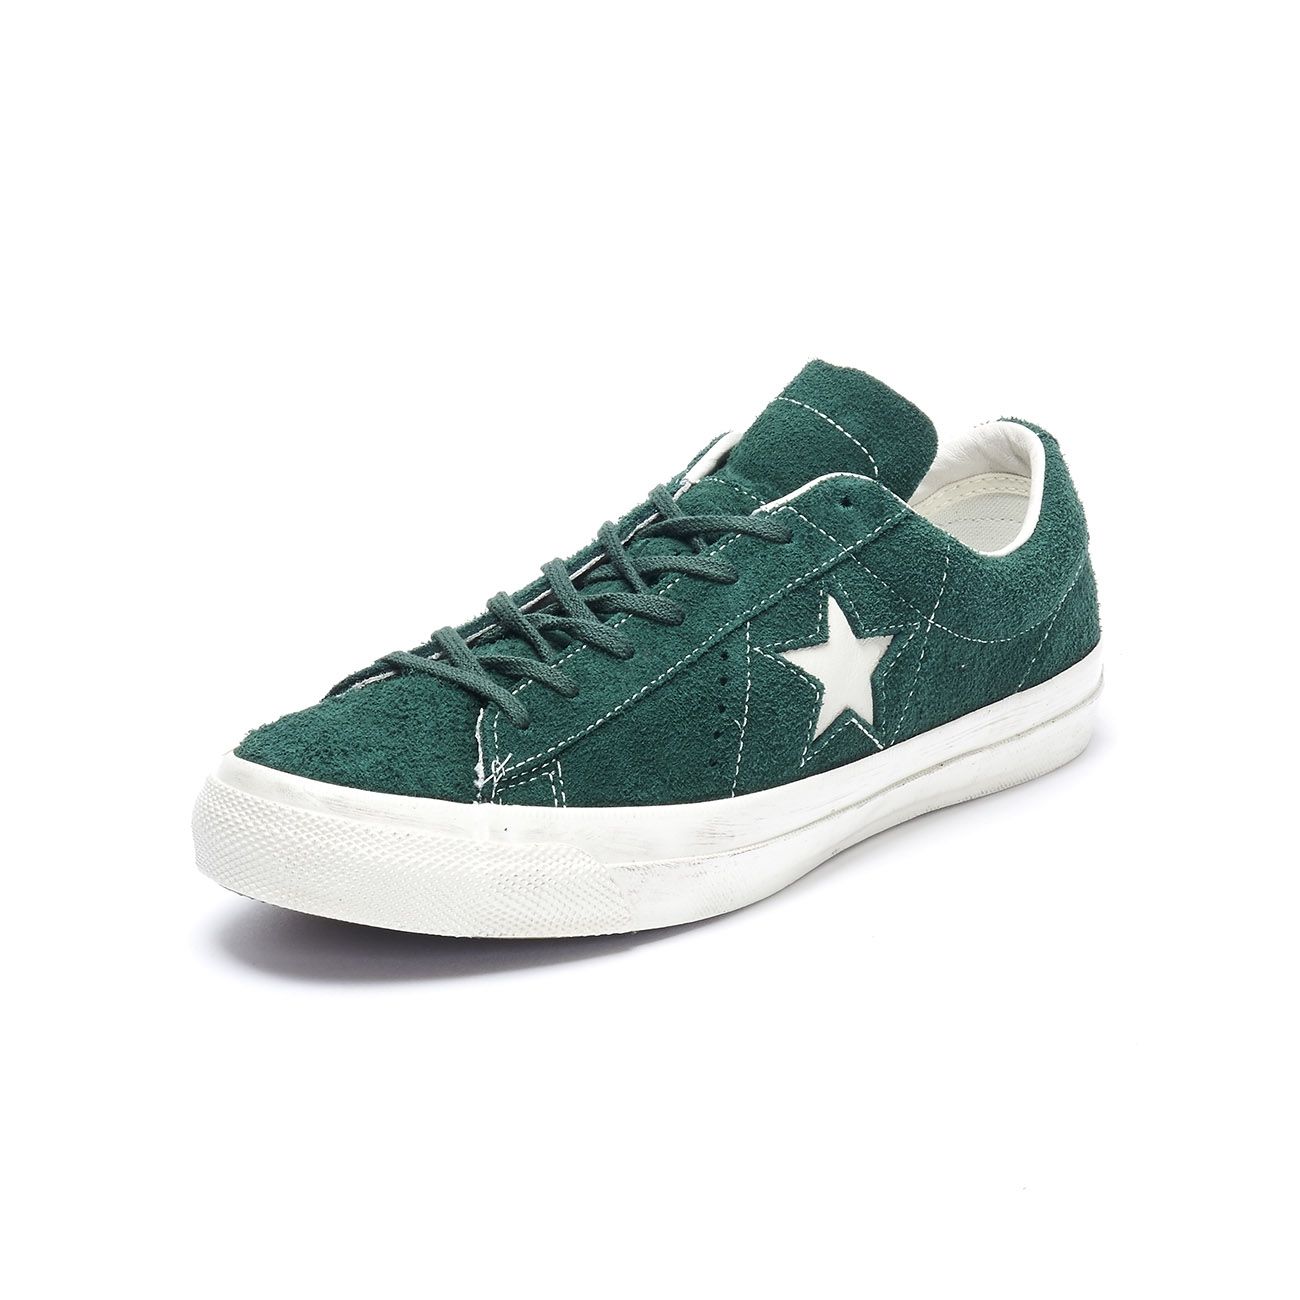 CONVERSE ONE STAR OX SNEAKERS Man Green cream | Mascheroni Sportswear صور للتويتر